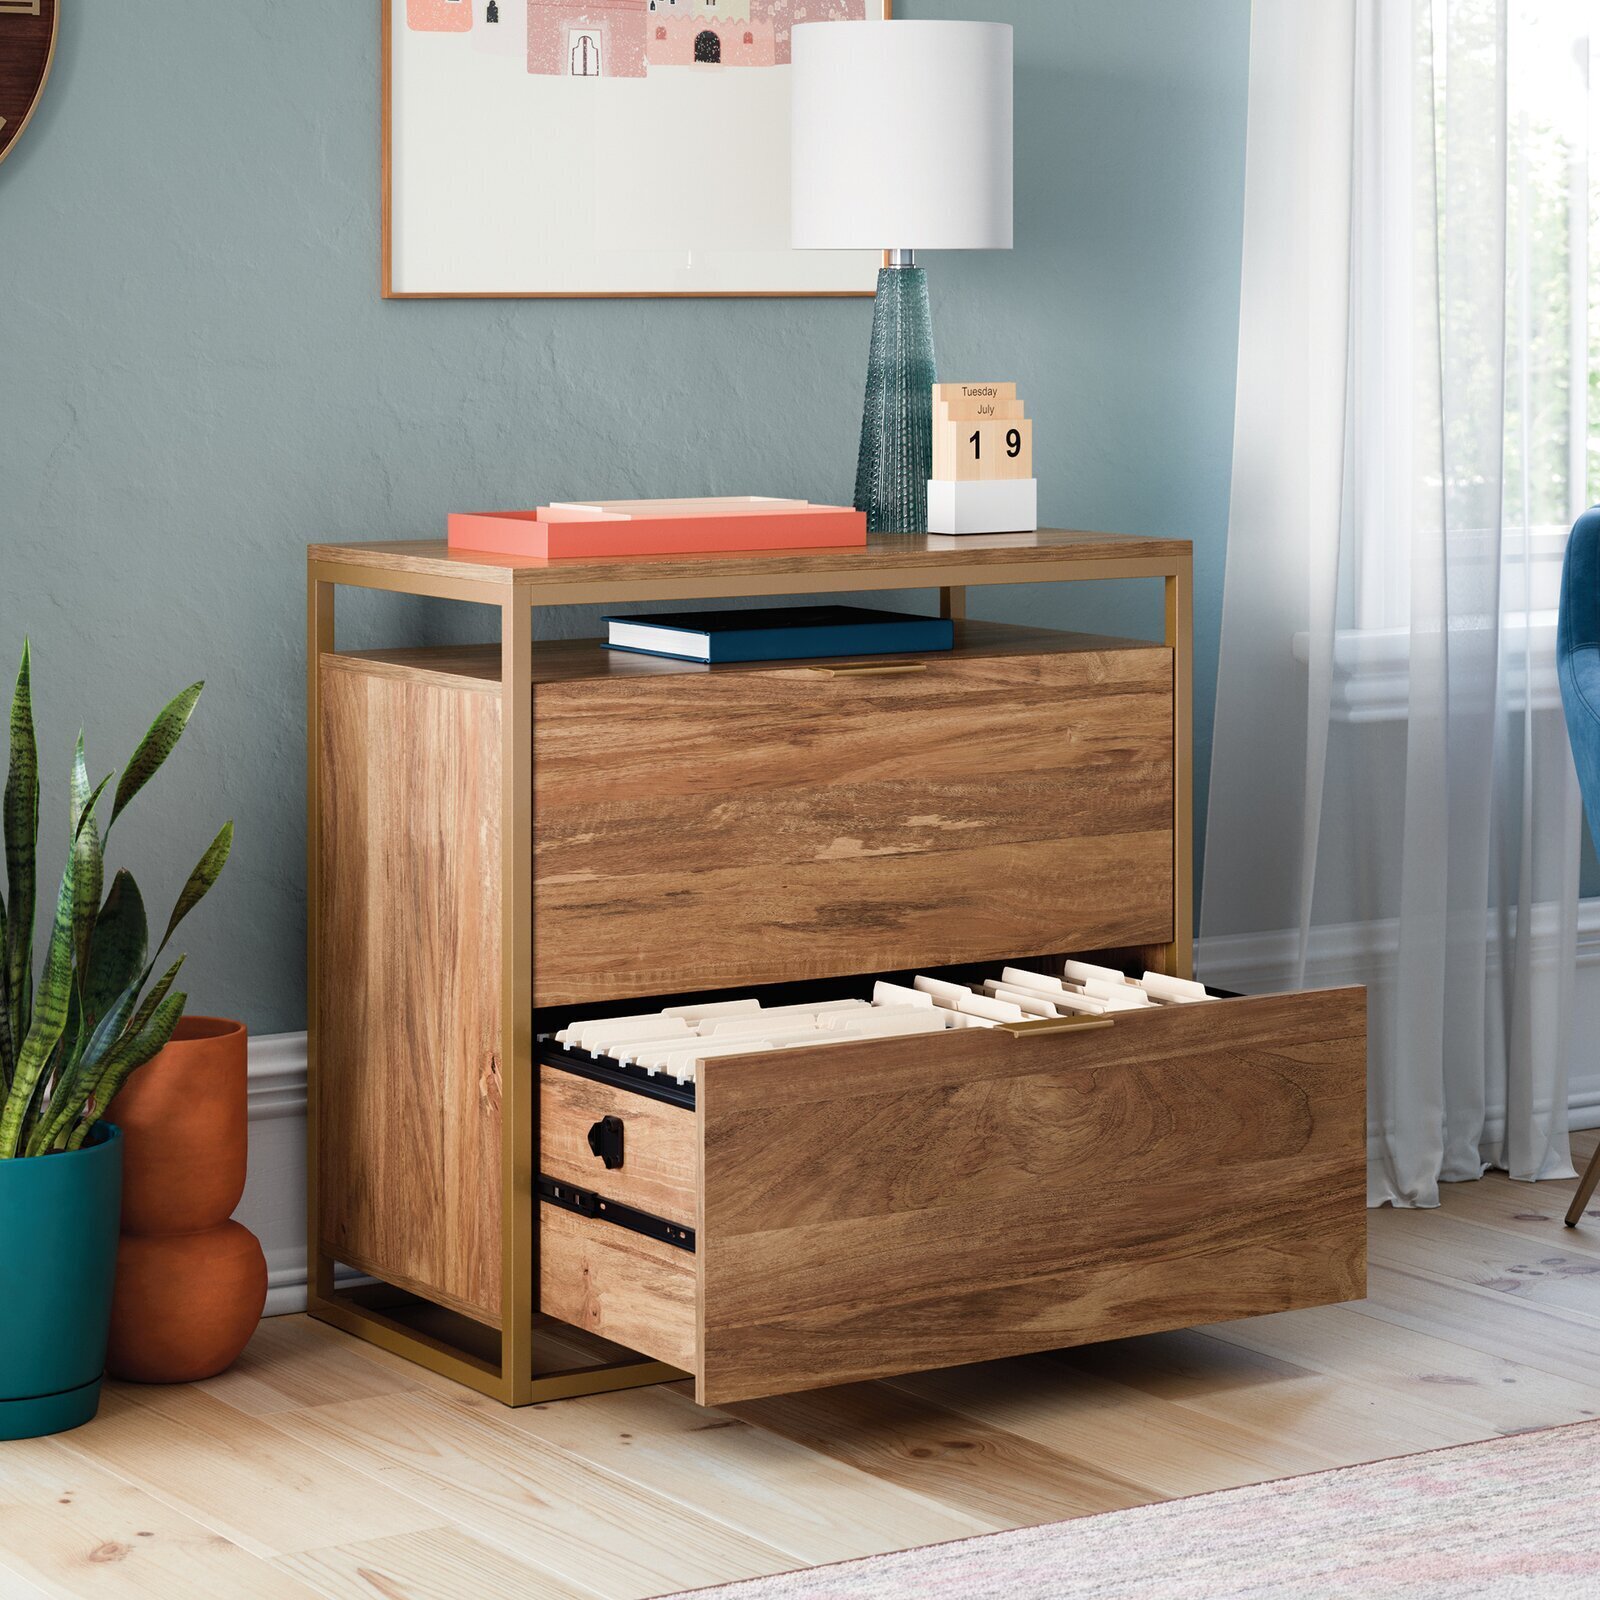 Stylish Wooden Filing Cabinet